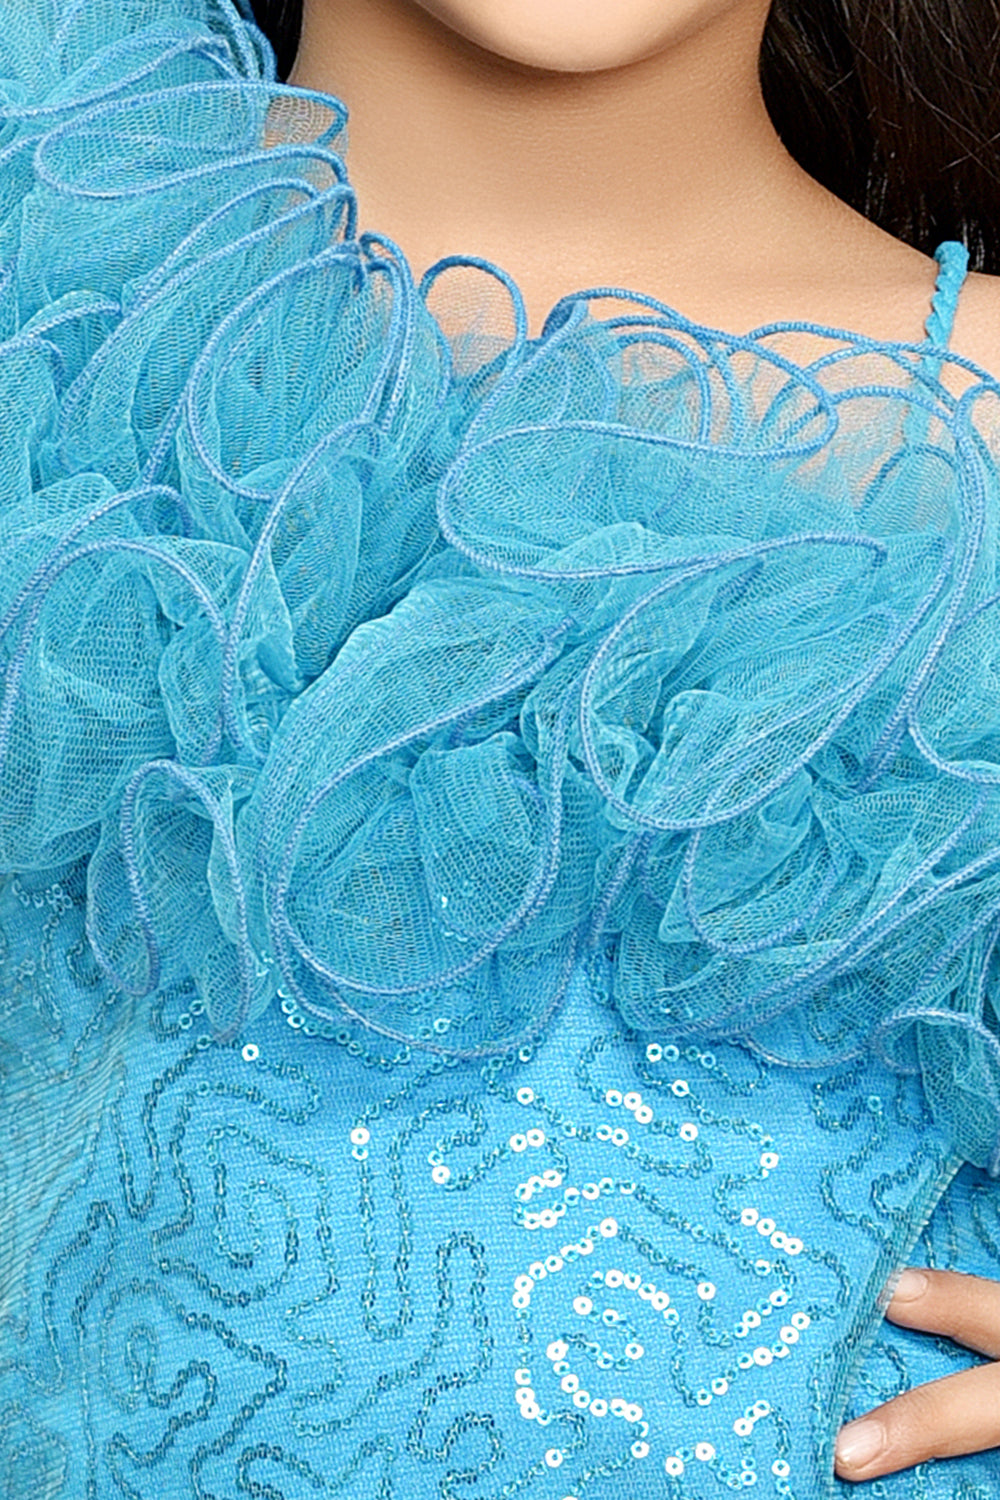 Sequined Aline Ruffled Dress -Blue